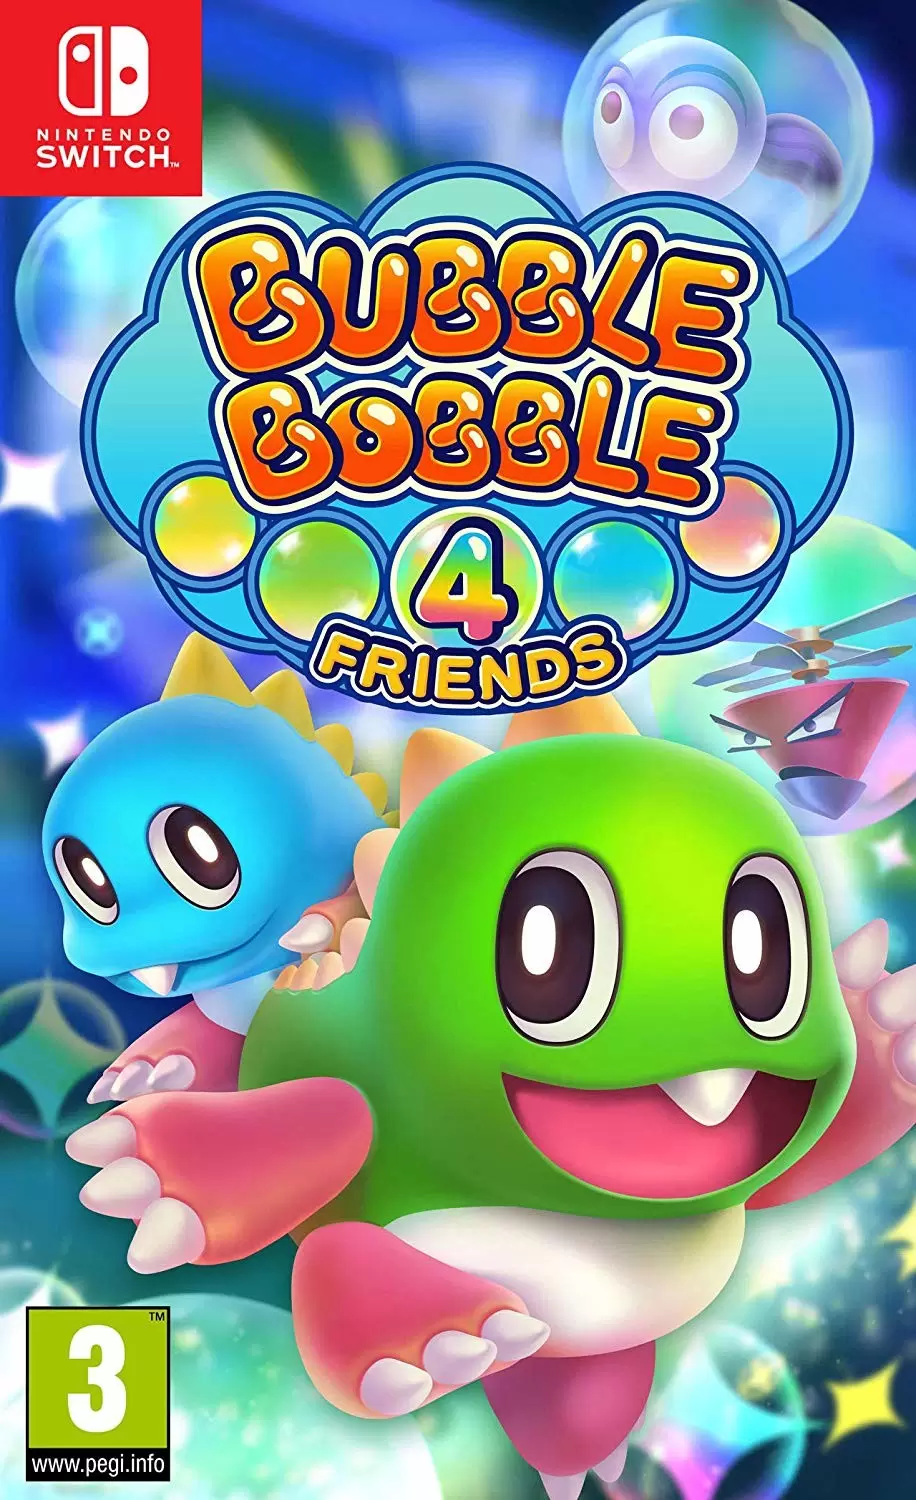 Nintendo Switch Games - Bubble Bobble 4 Friends